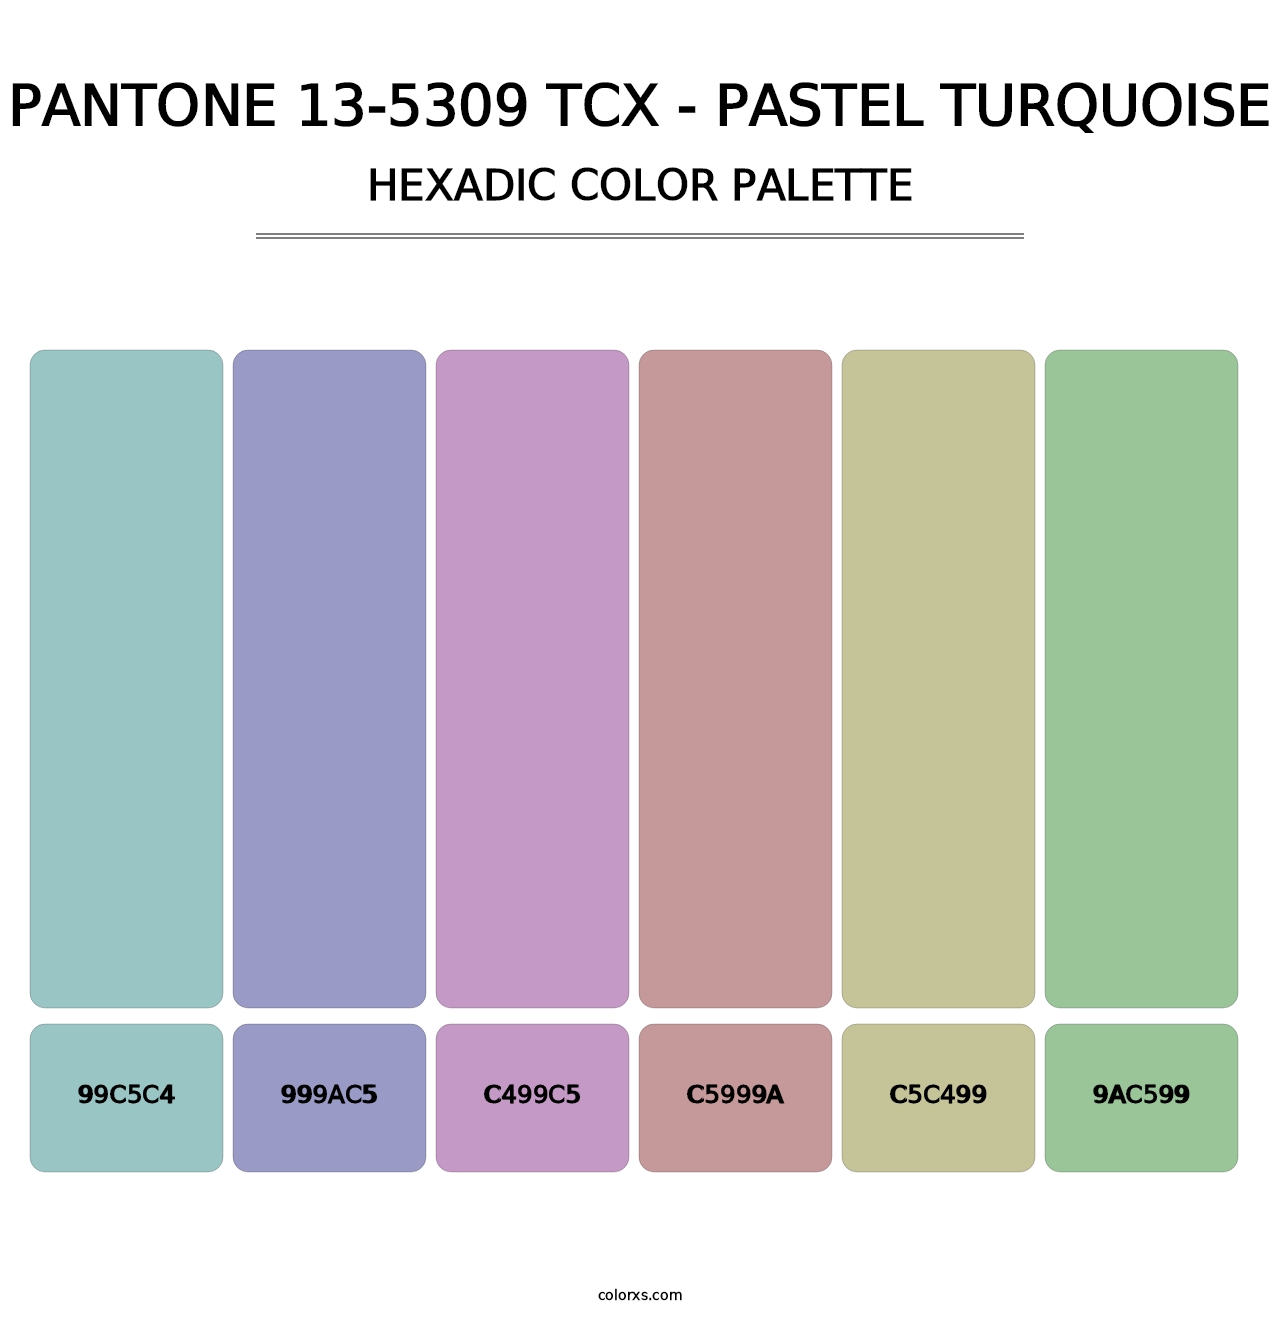 PANTONE 13-5309 TCX - Pastel Turquoise - Hexadic Color Palette